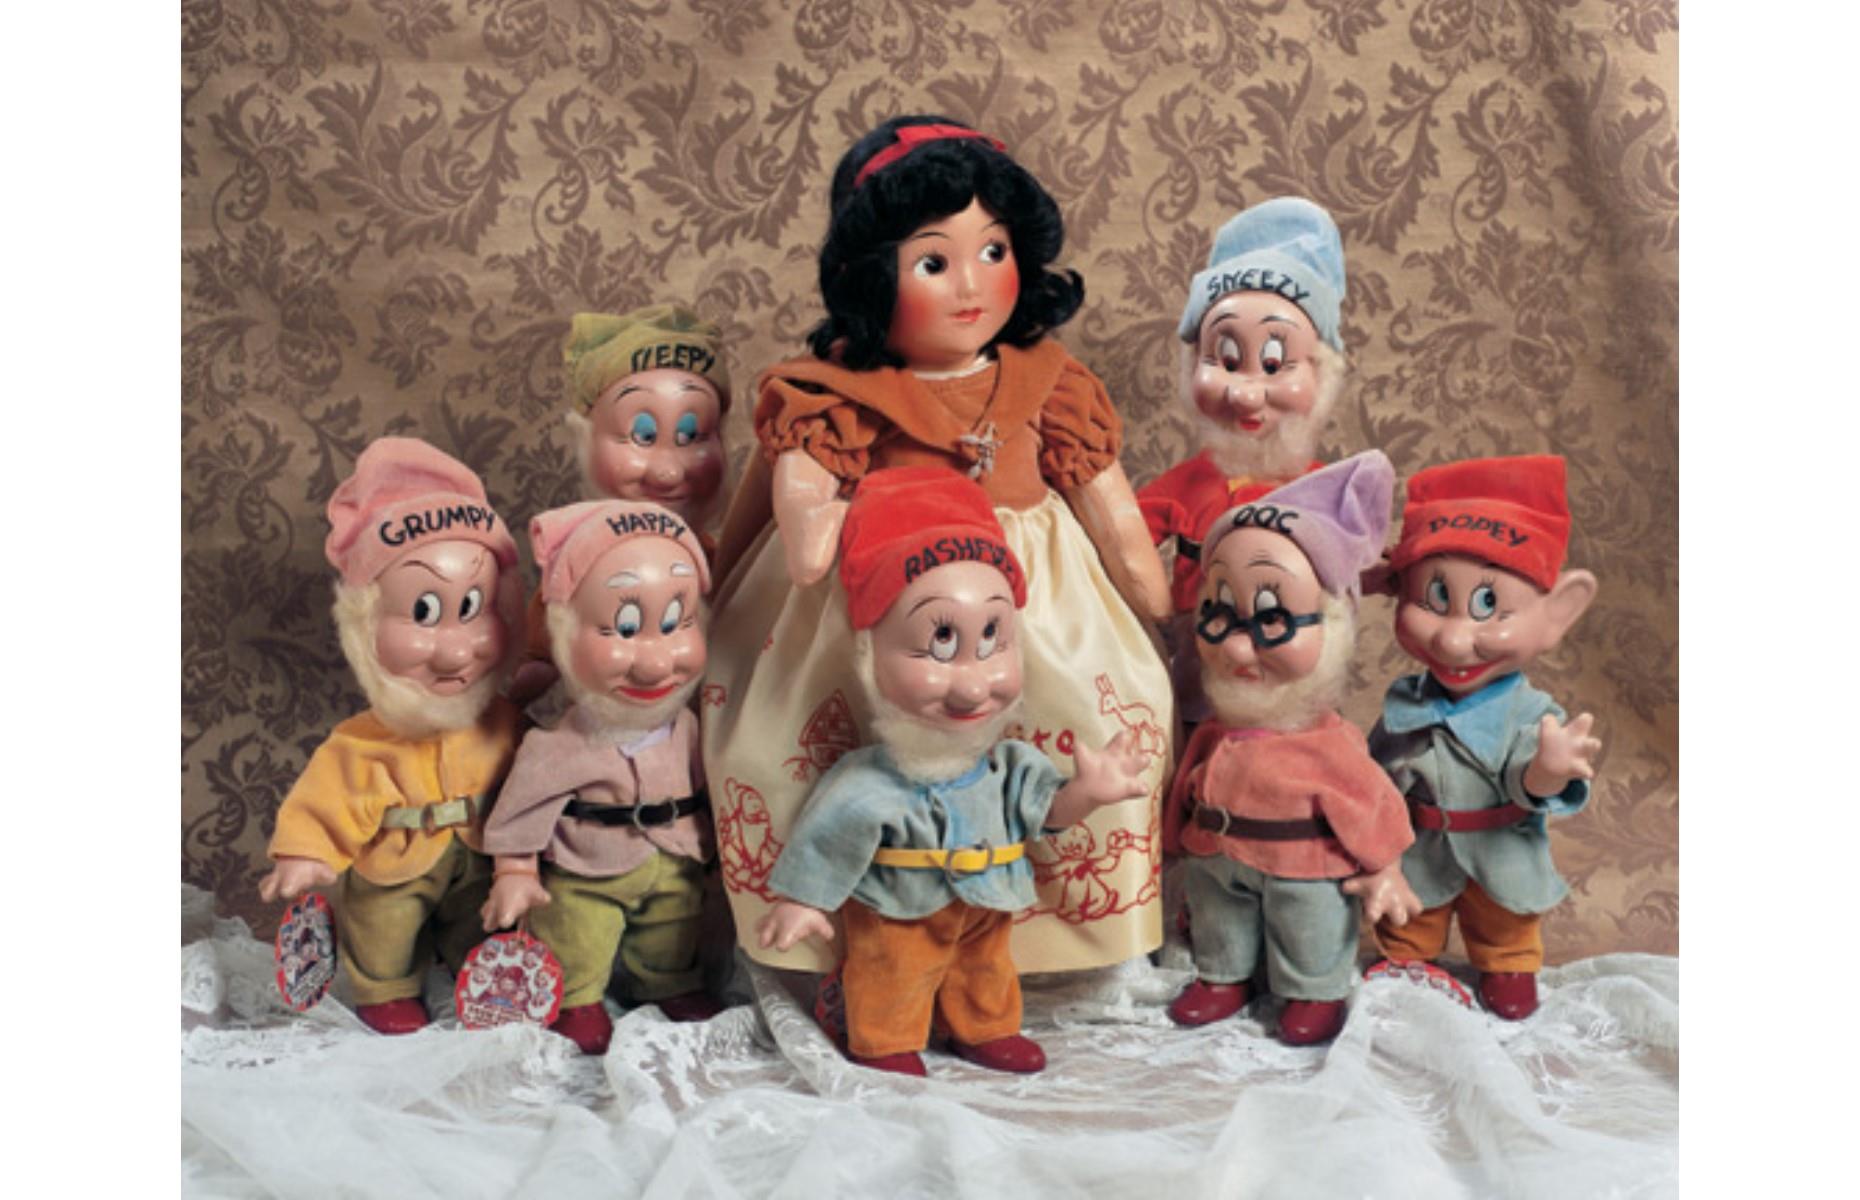 Knickerbocker Snow White and the Seven Dwarfs doll set: up to $1,500 (£1.2k)